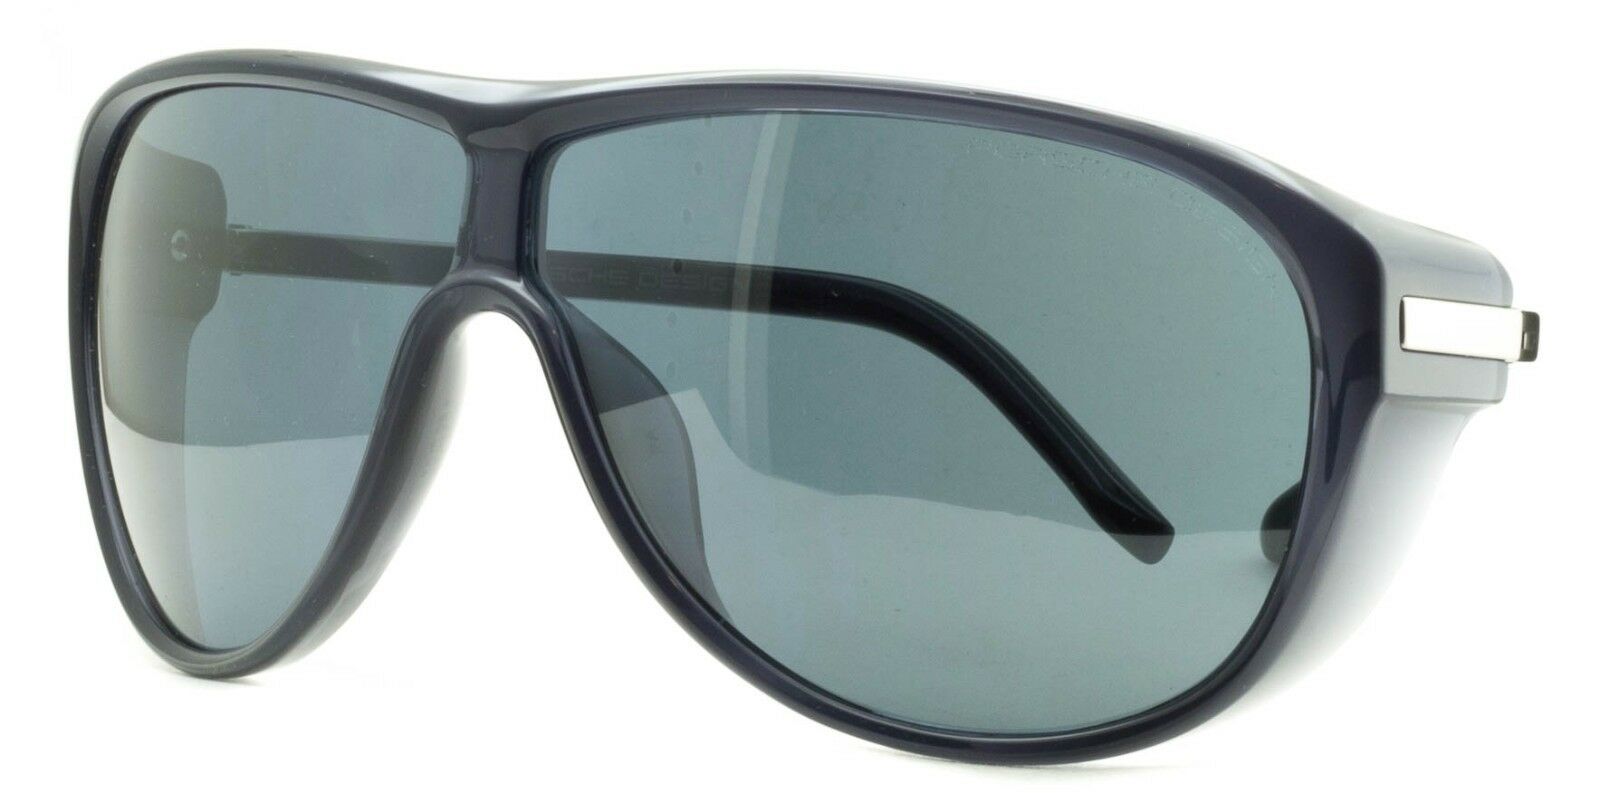 PORSCHE P 8598 A 3 Eyewear SUNGLASSES Glasses Shades - New - GGV